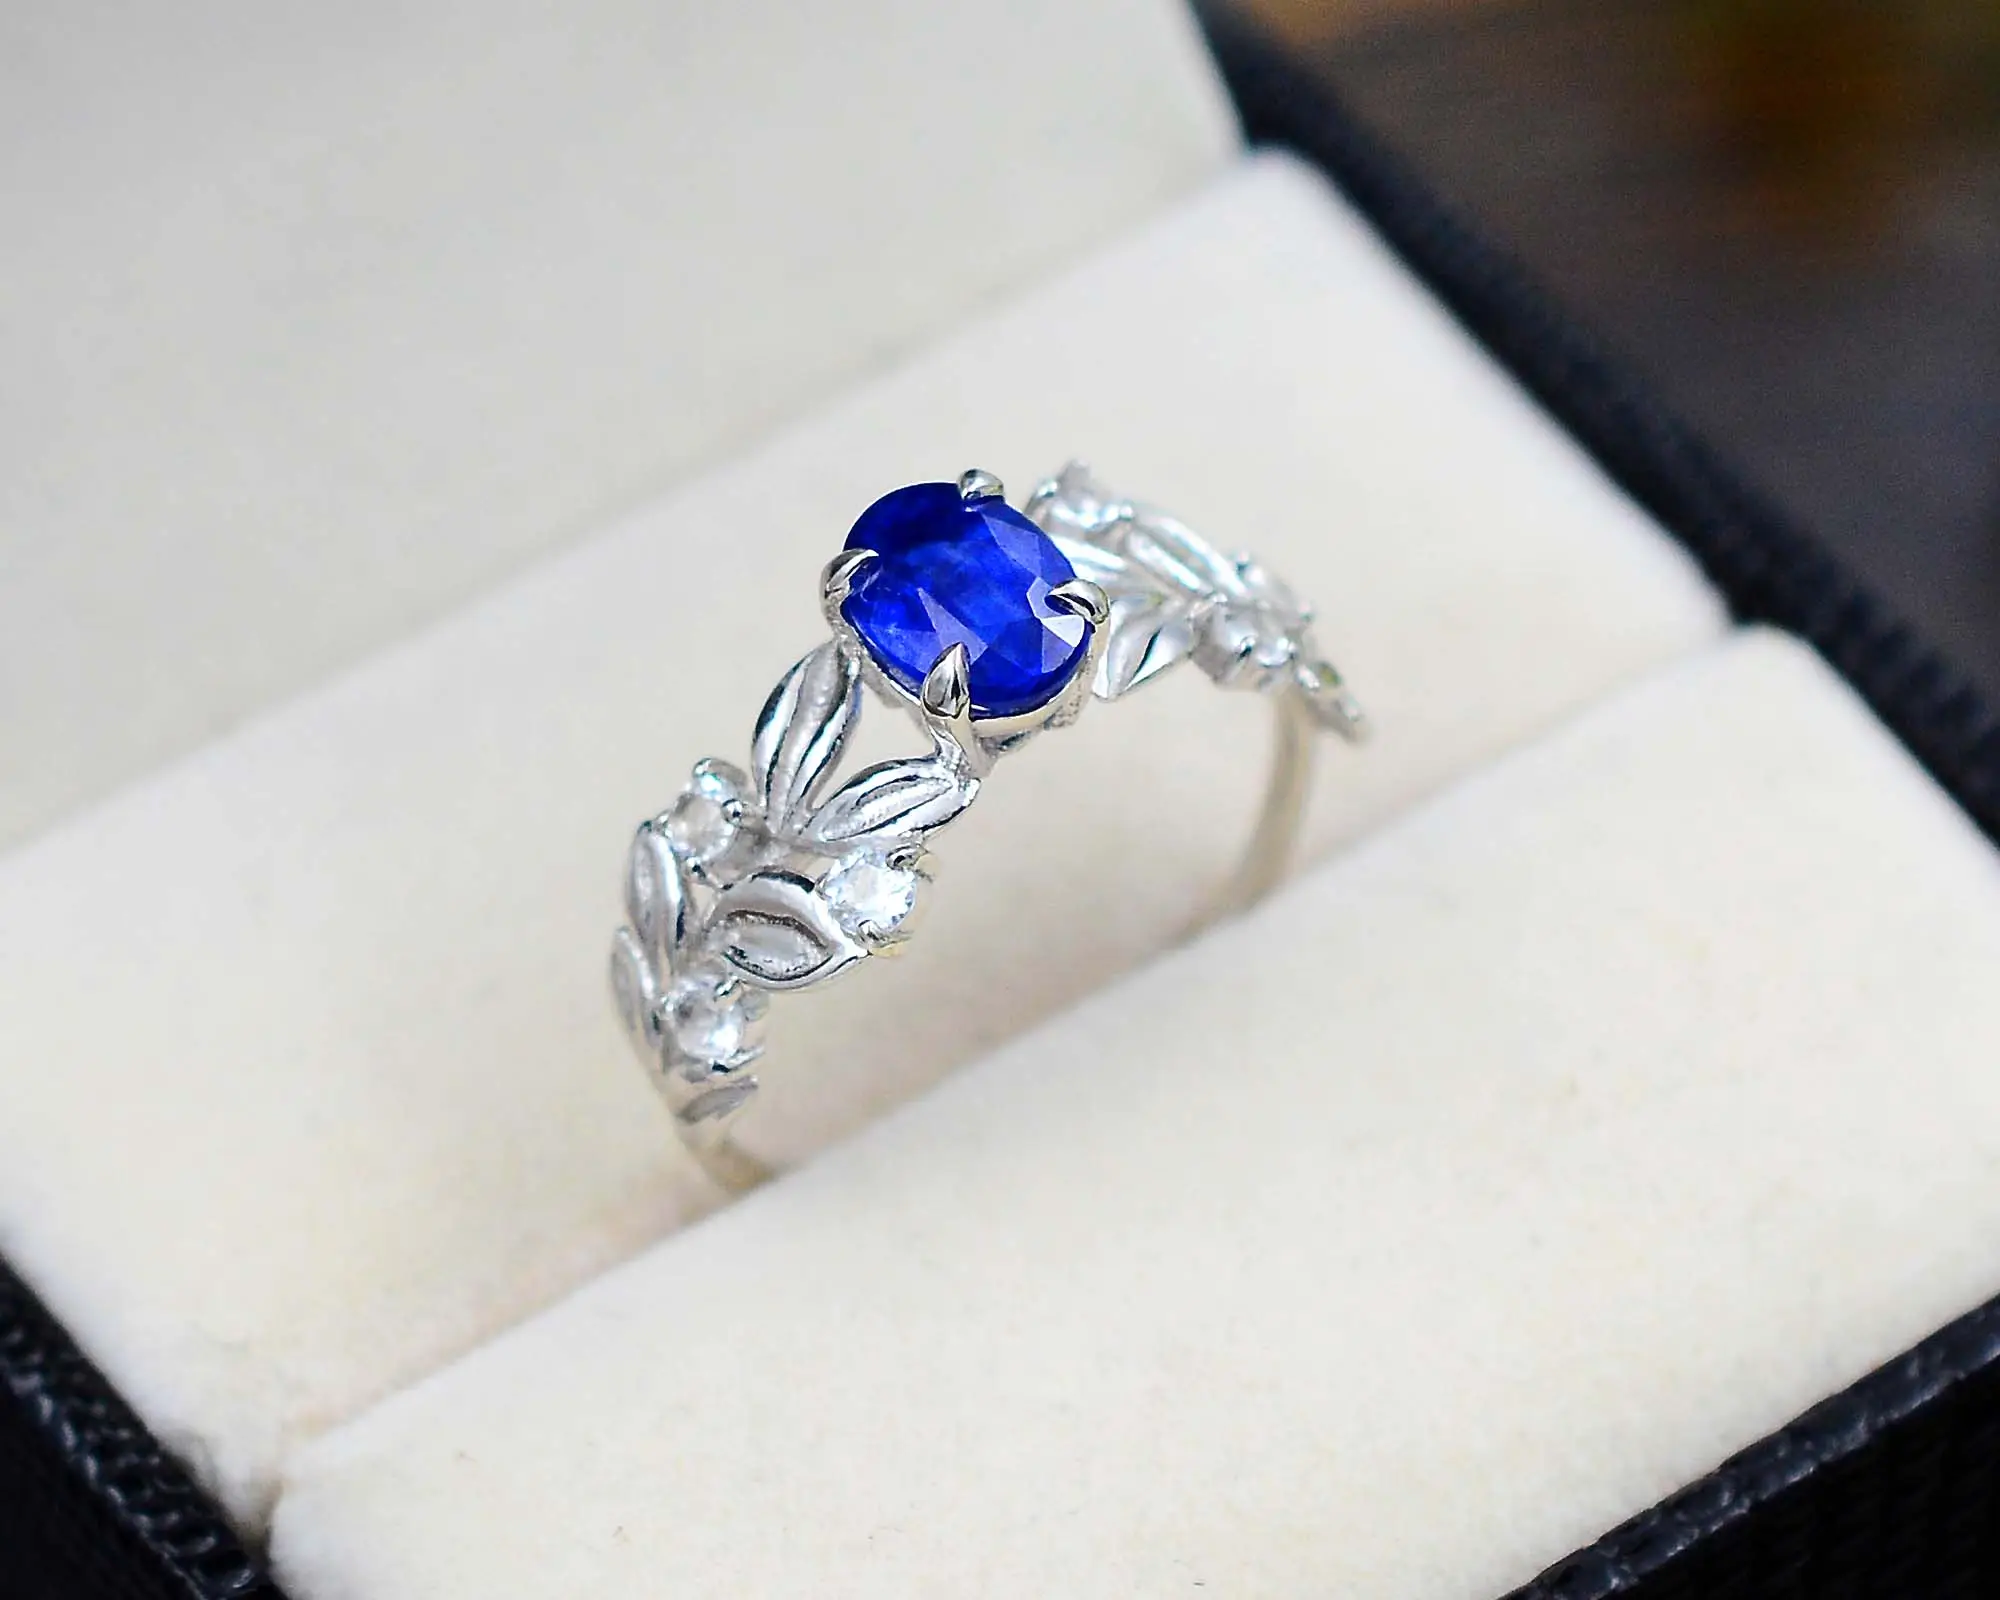 Wonderable Blue Sapphire 6x8 Oval Shape Natural Gemstone 925 Sterling Silver Handmade Ring By Huge Supplier & Manufacturer